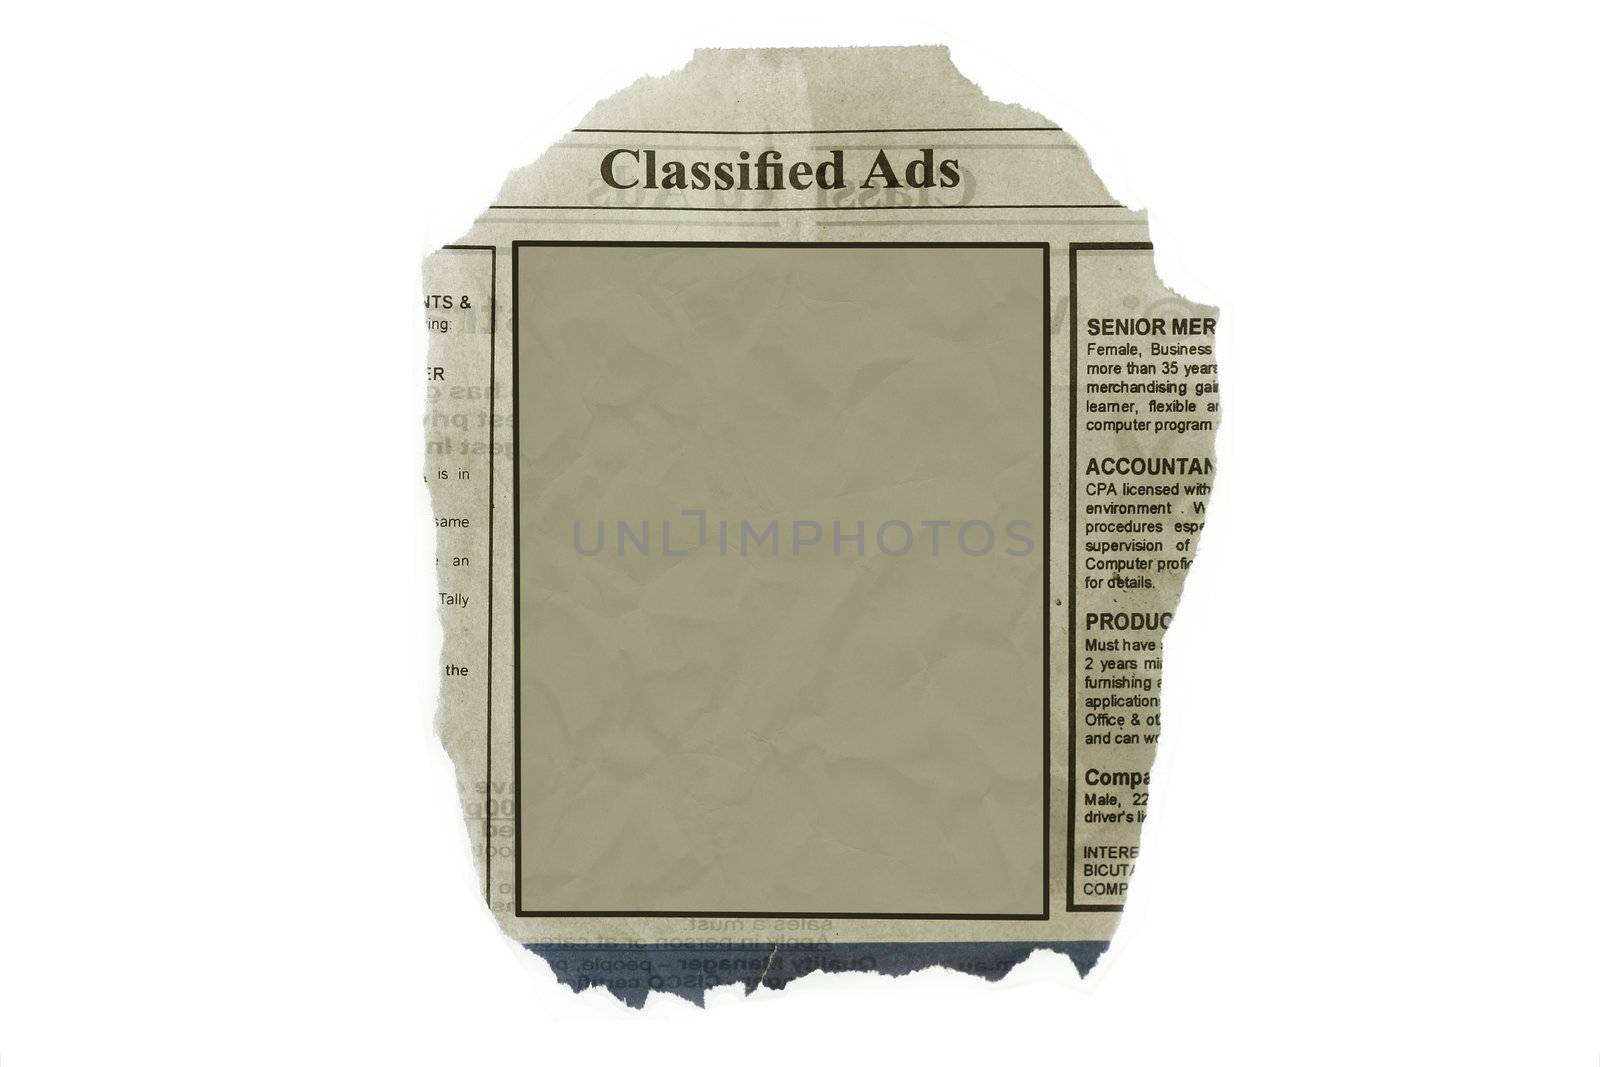 Classified ads by sacatani